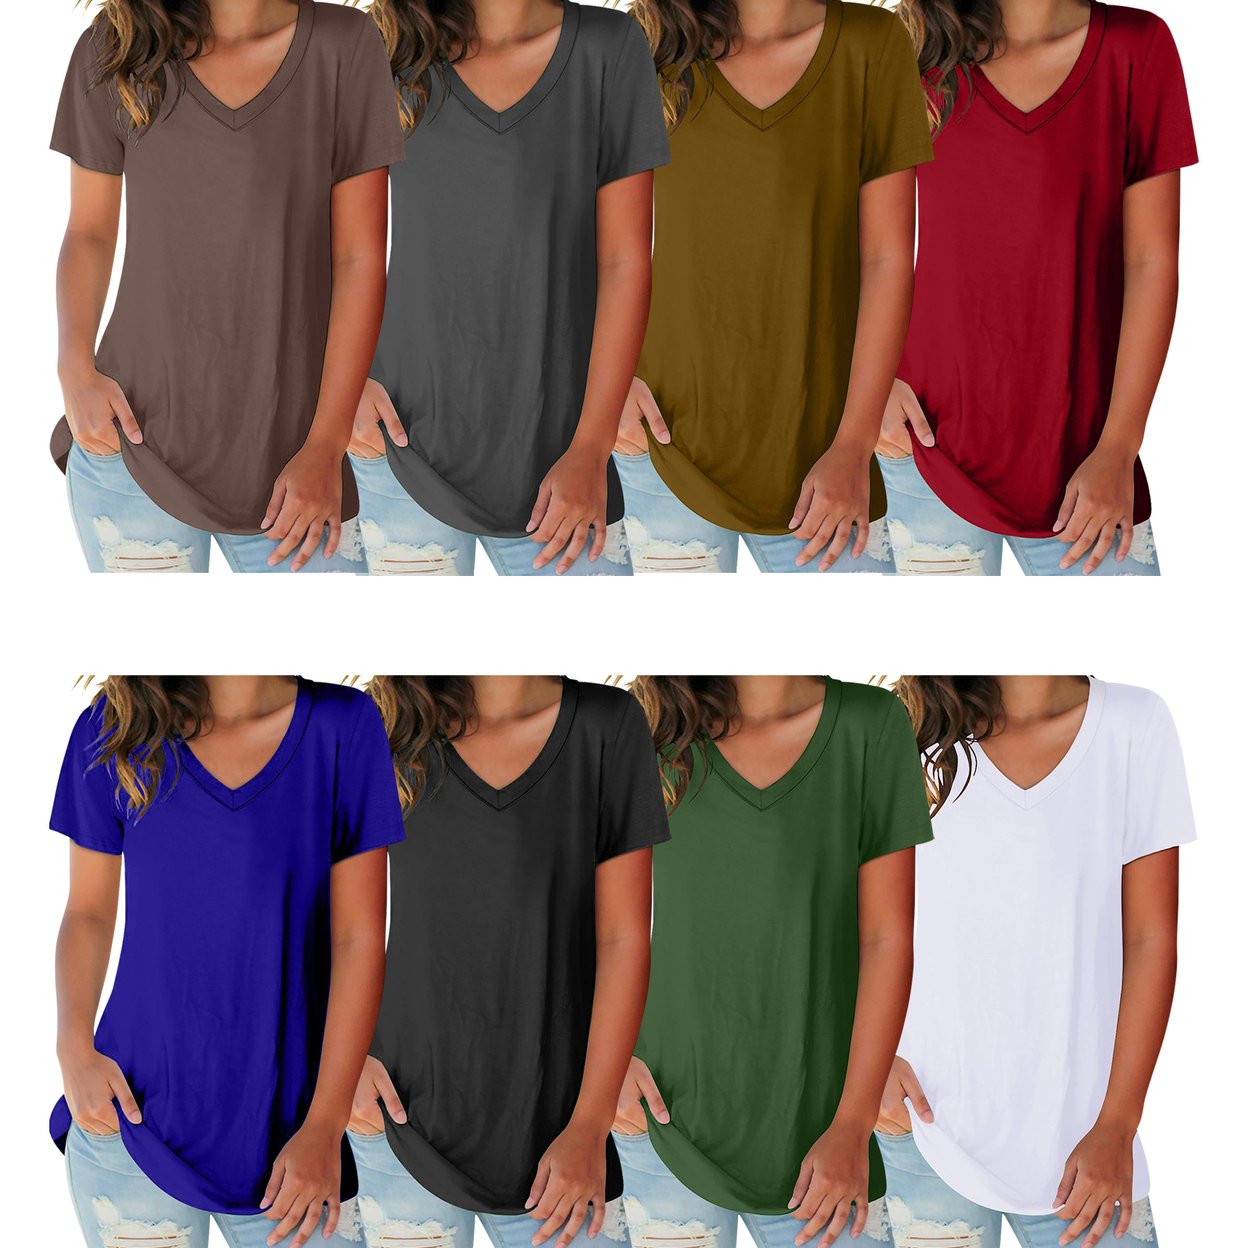 3-Pack: Women's Ultra Soft Smooth Cotton Blend Basic V-Neck Short Sleeve Shirts - Black Grey, Red, Large